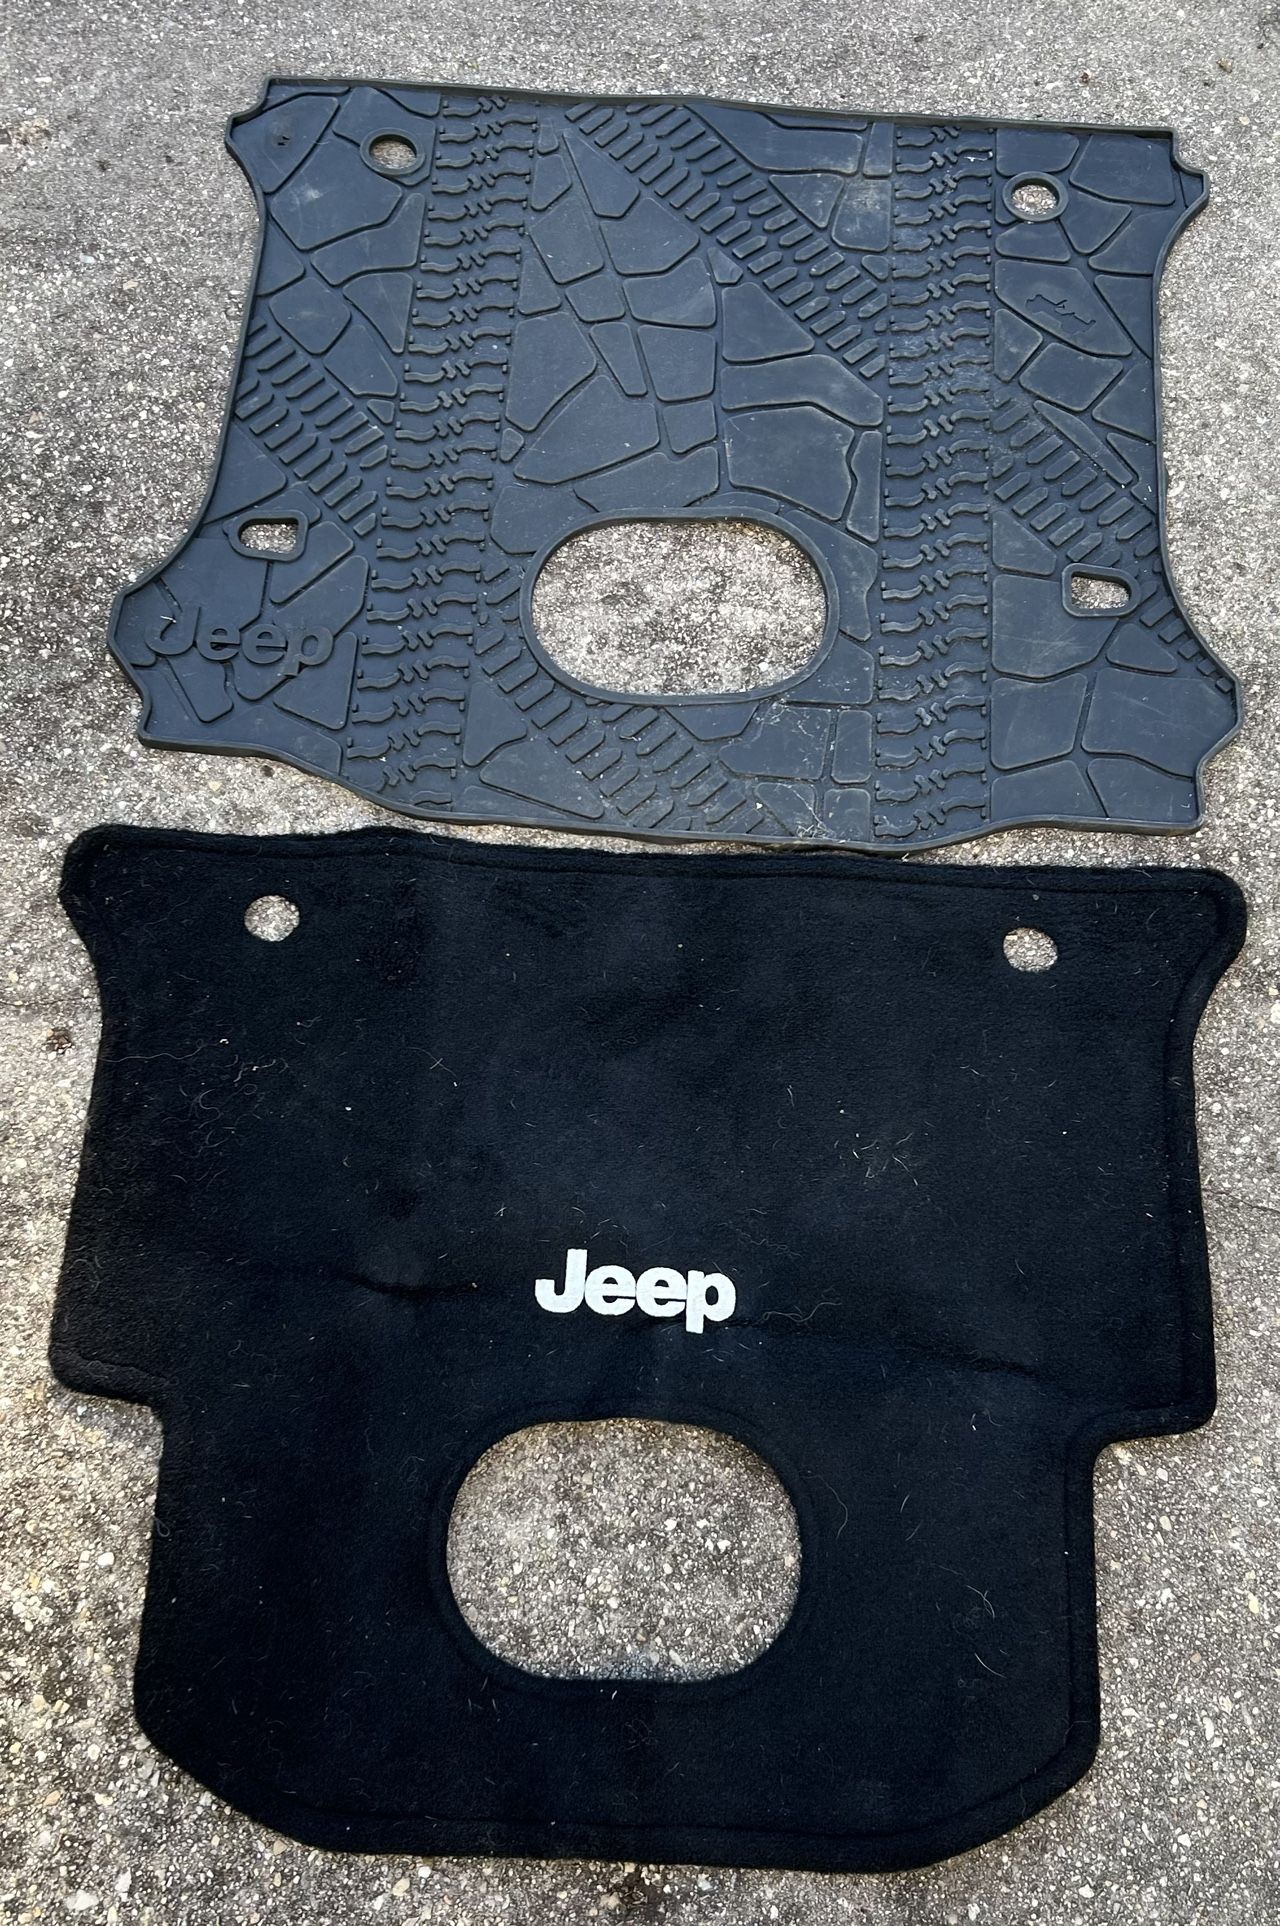 Jeep Wrangler JK (2007-2017) Factory Rear Carpet Set